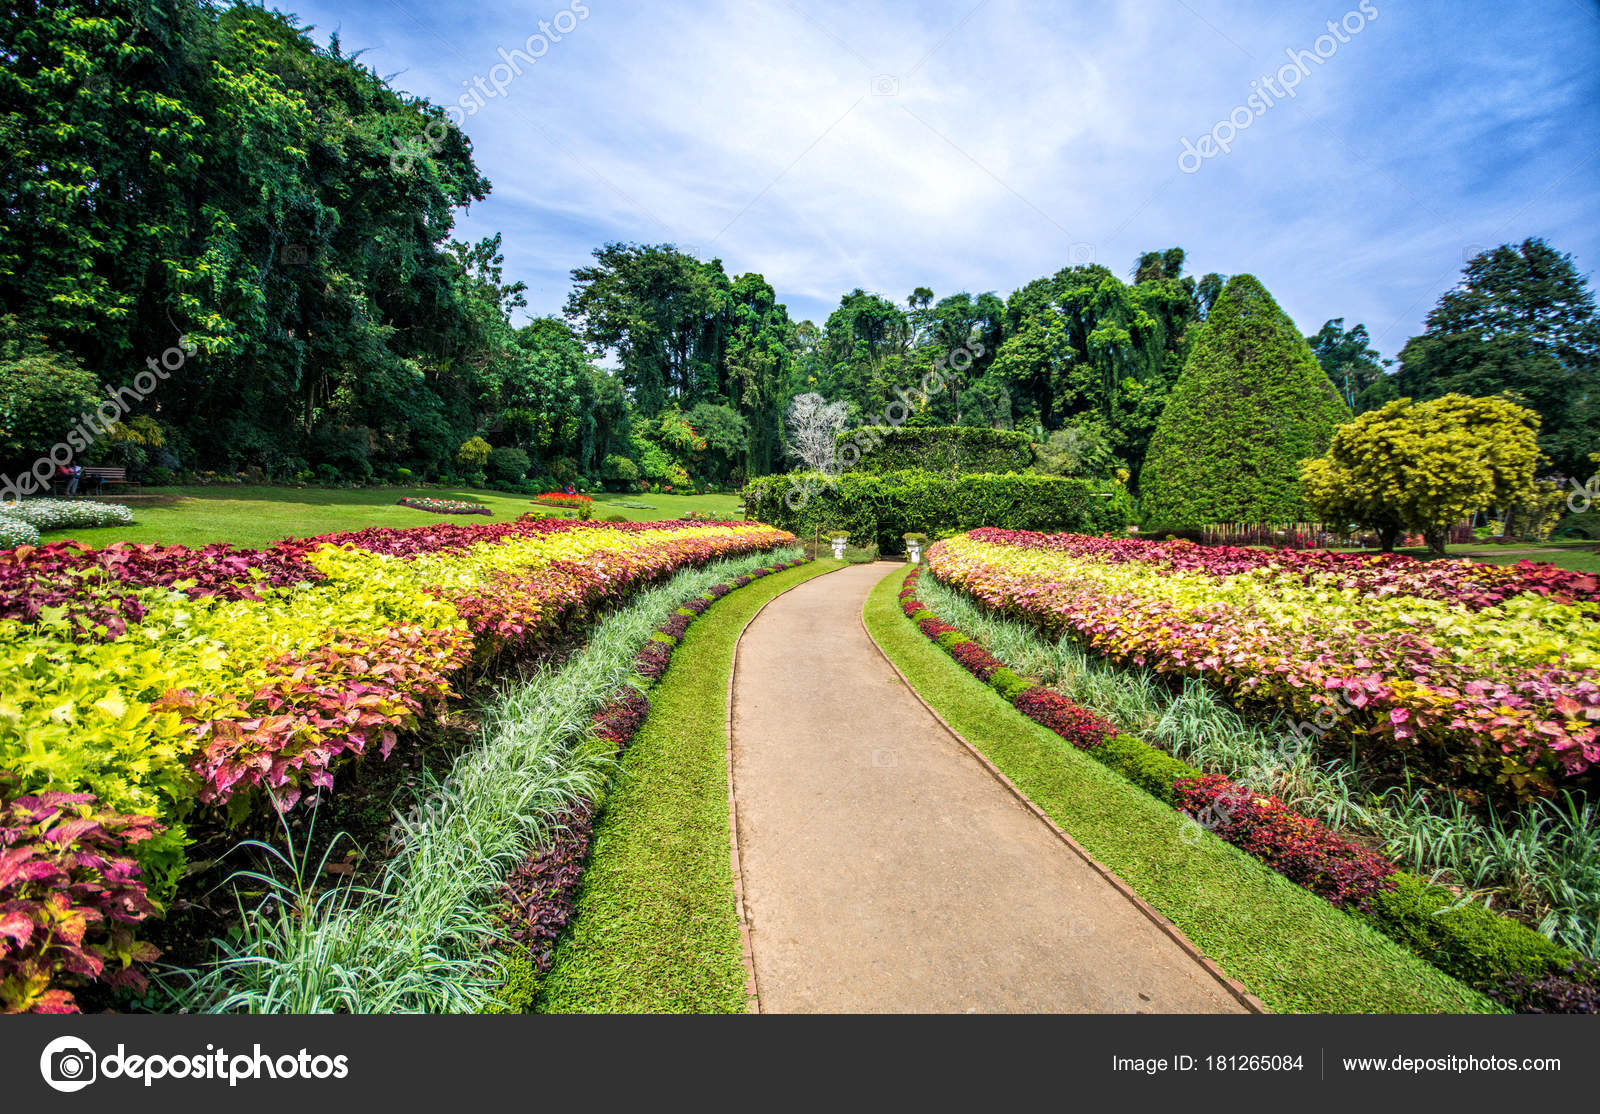 depositphotos stock photo botanical garden peradeniya kandy royal